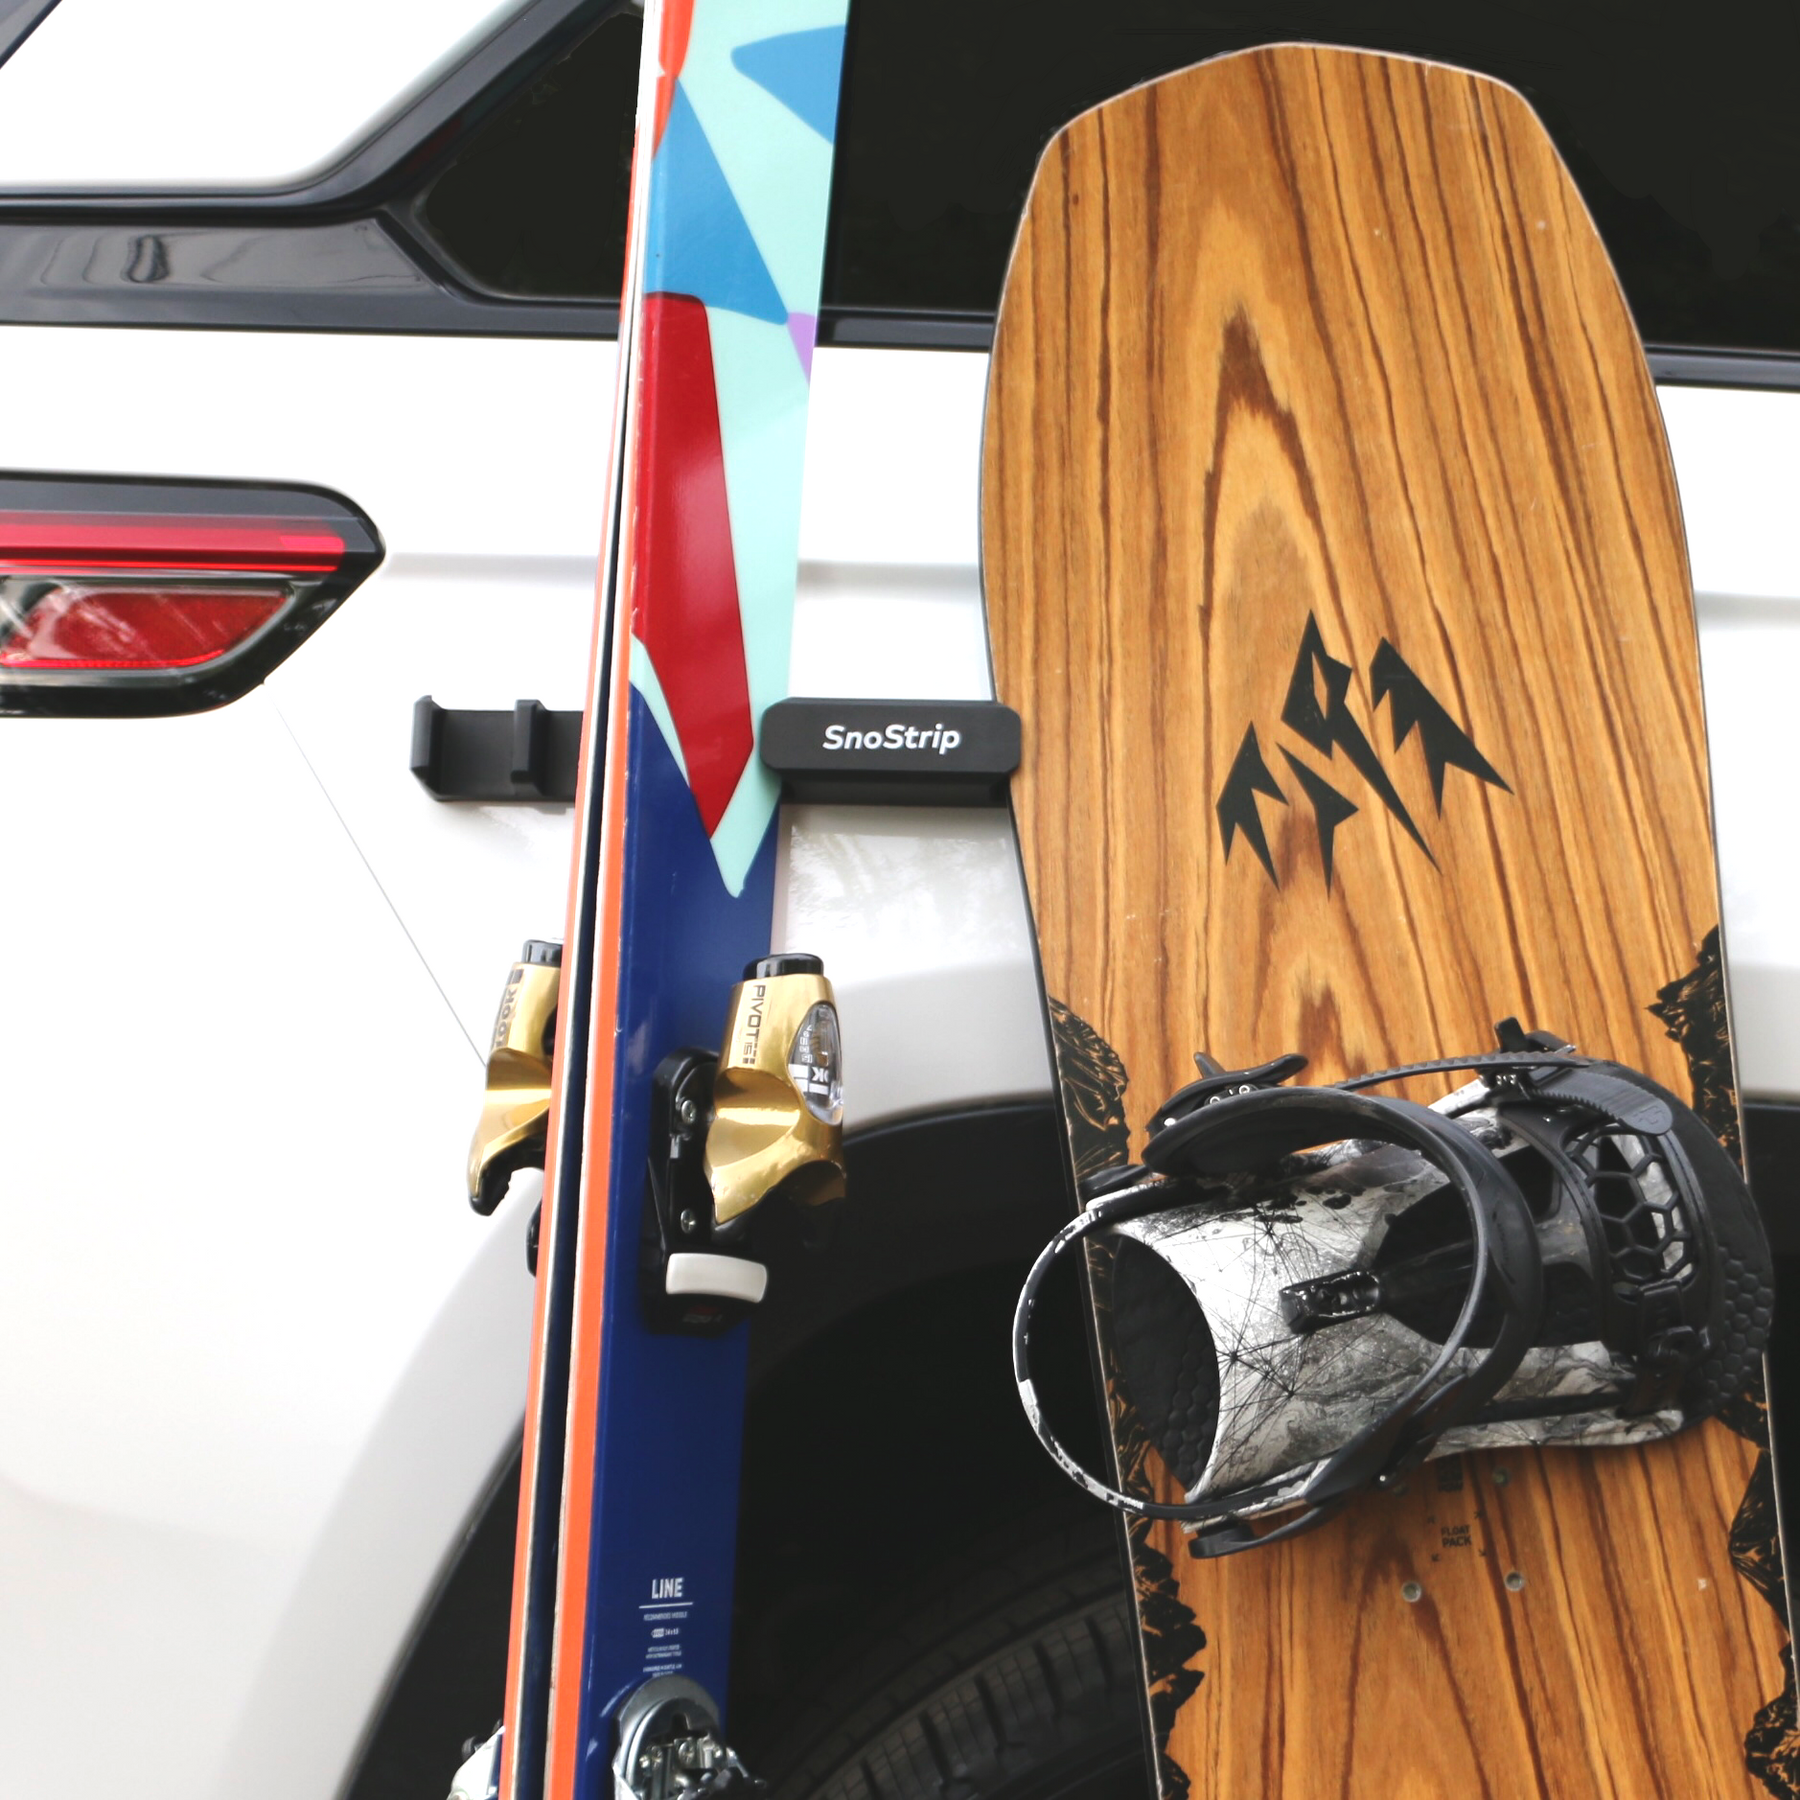 SnoStrip Adhesive Protective Ski & Snowboard Vehicle Mount (Adhesive)